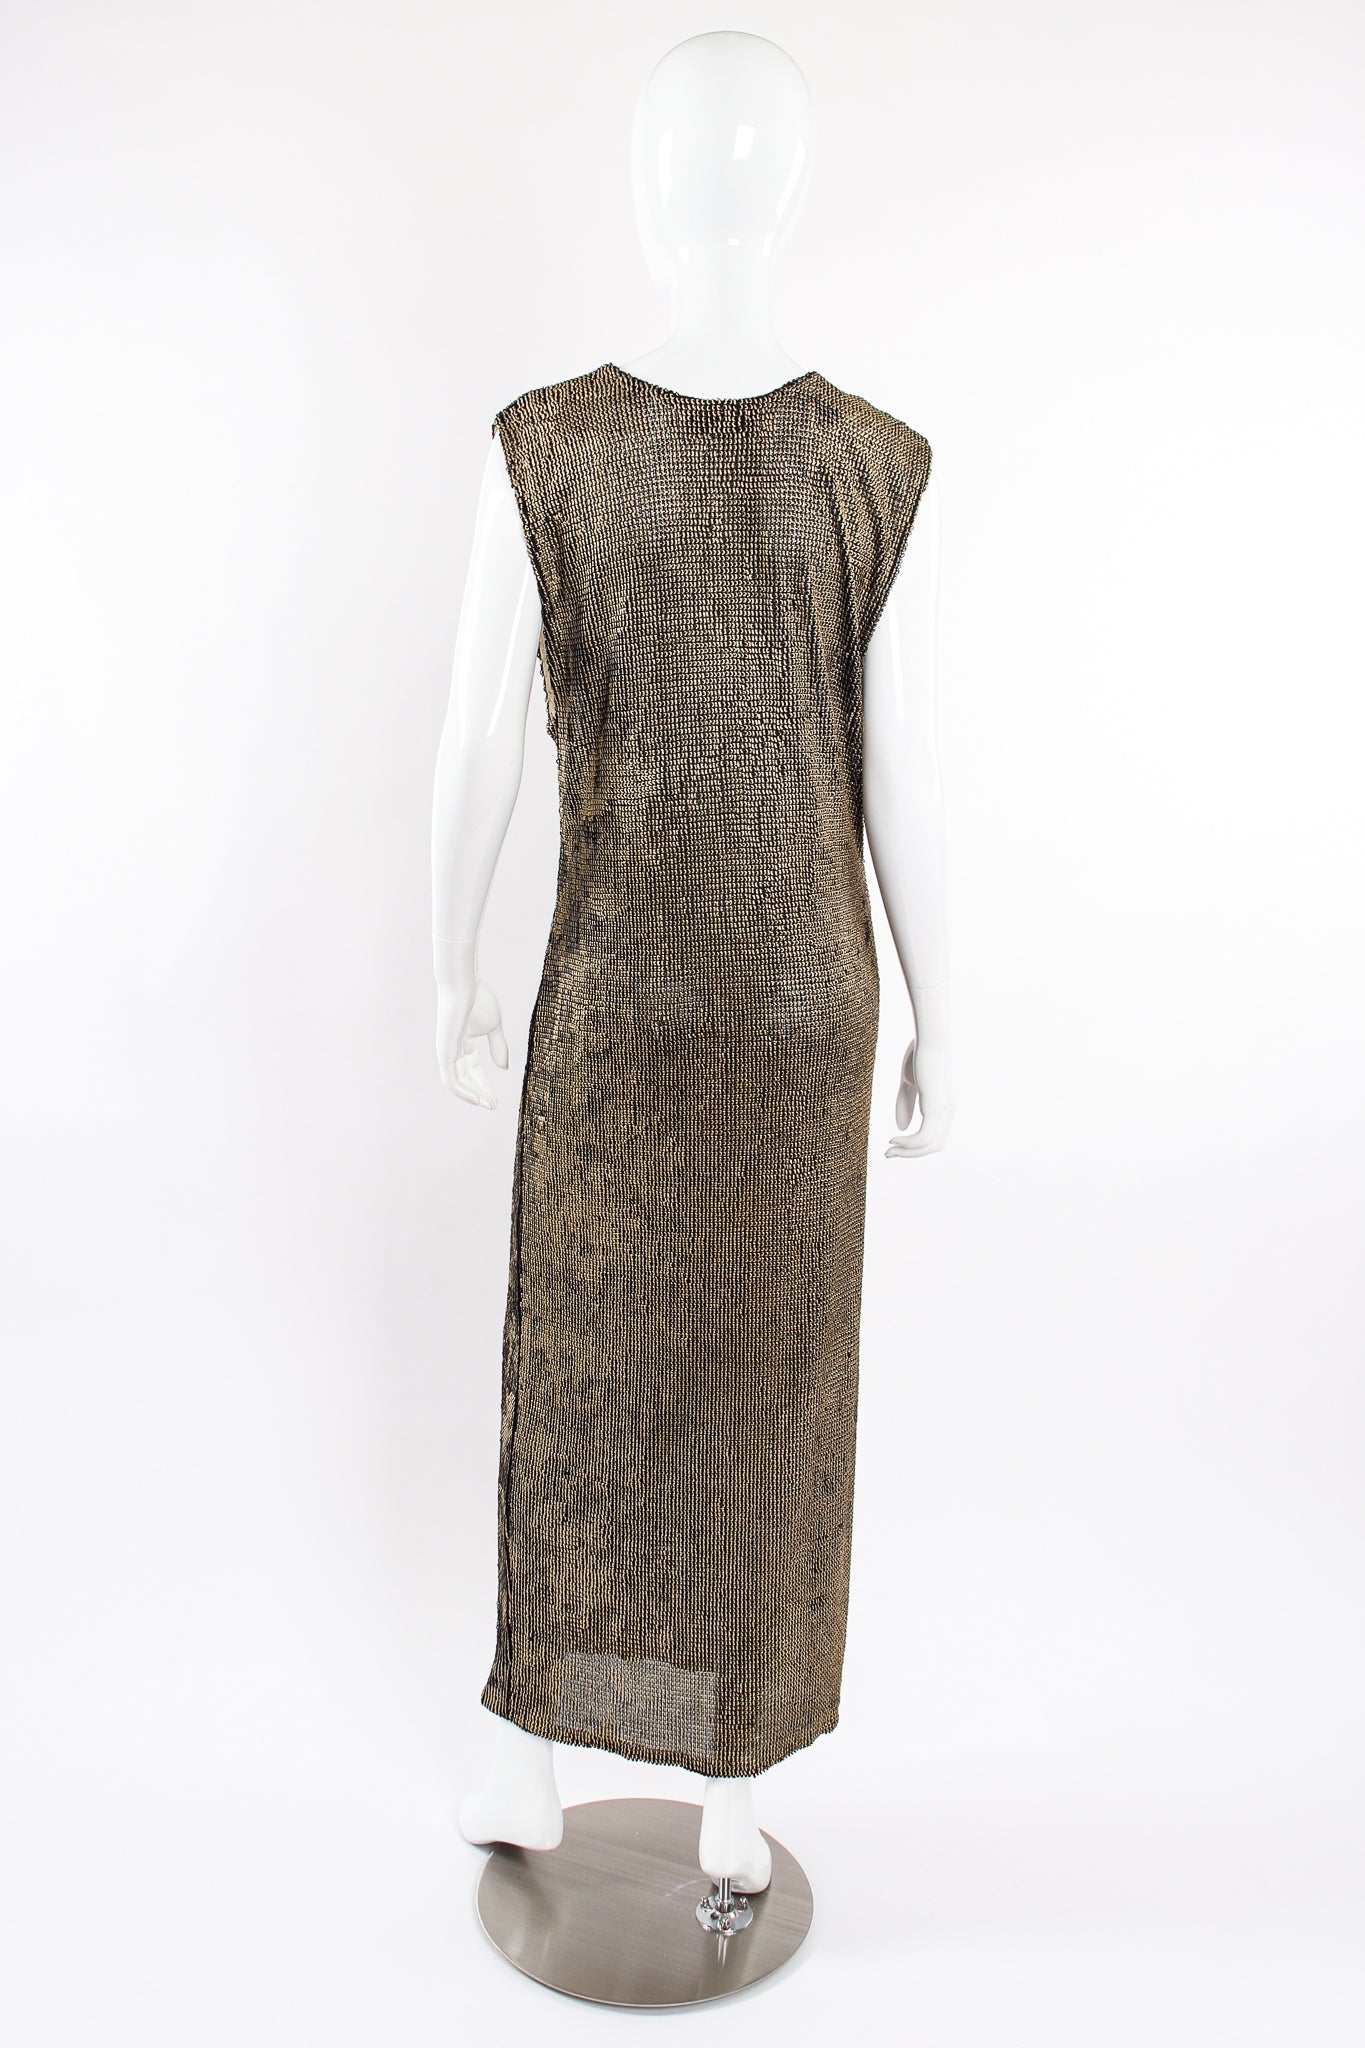 Vintage Krizia Liquid Metallic Painted Dress On Mannequin back reverse at Recess LA